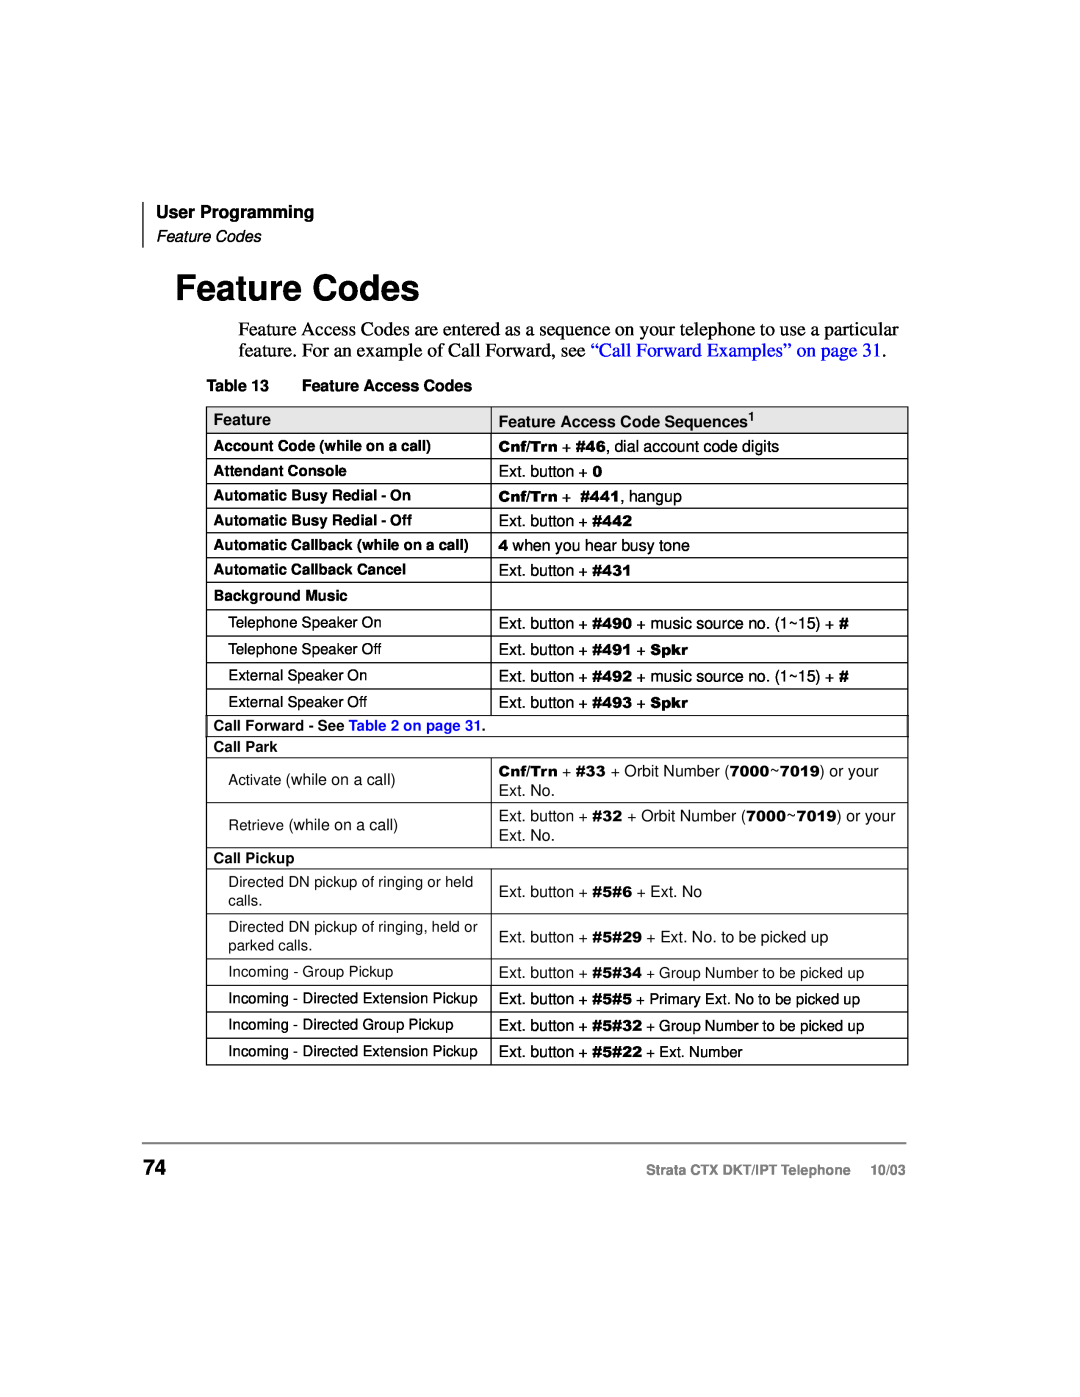 Toshiba IPT, DKT manual Feature Codes, QI7UQ +, User Programming, Feature Access Codes, Feature Access Code Sequences 